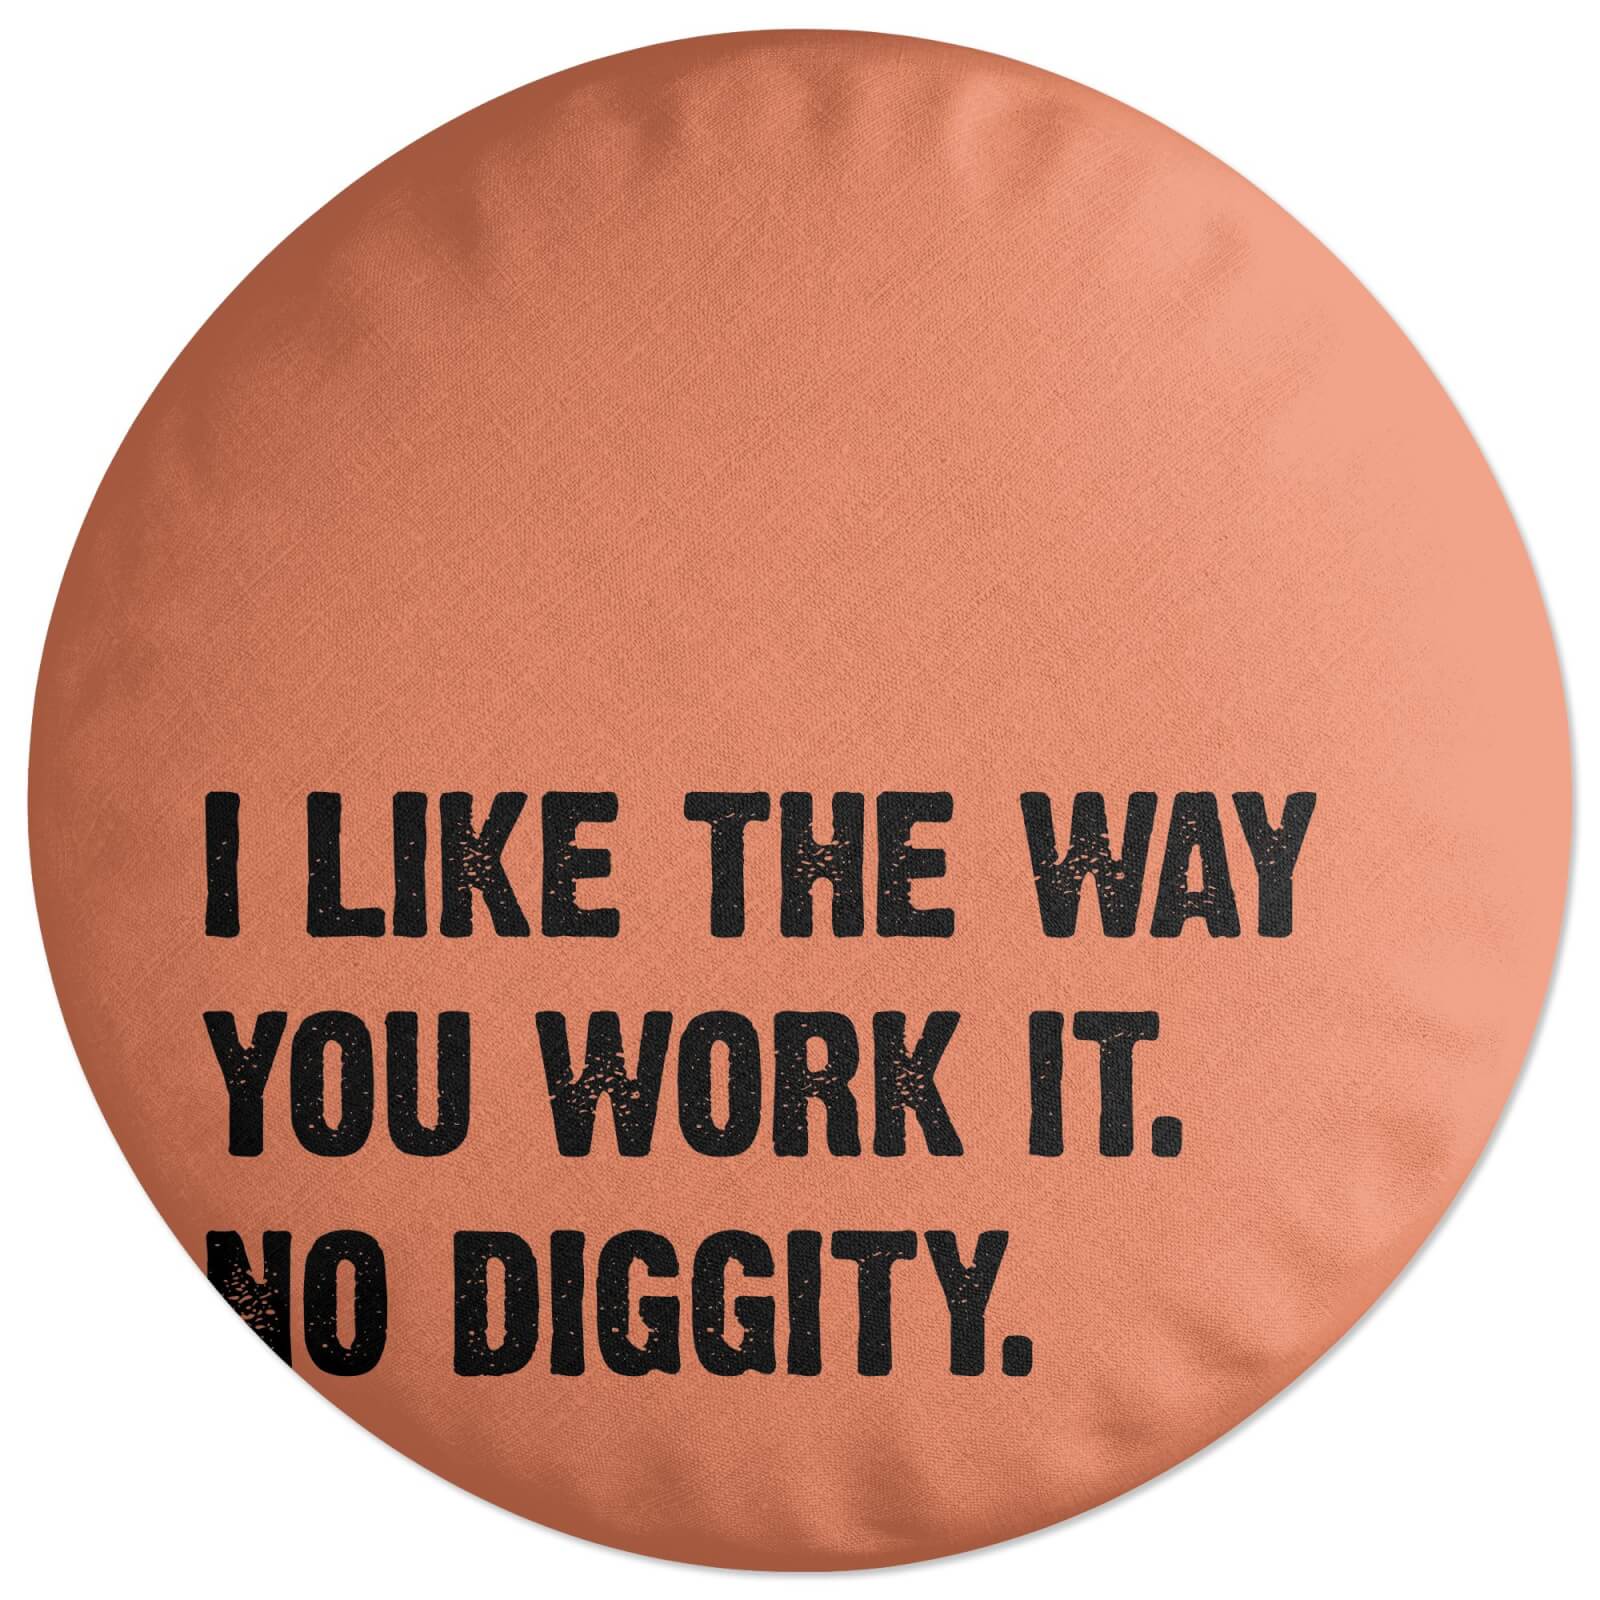 I Like The Way You Work It. No Diggity. Round Cushion